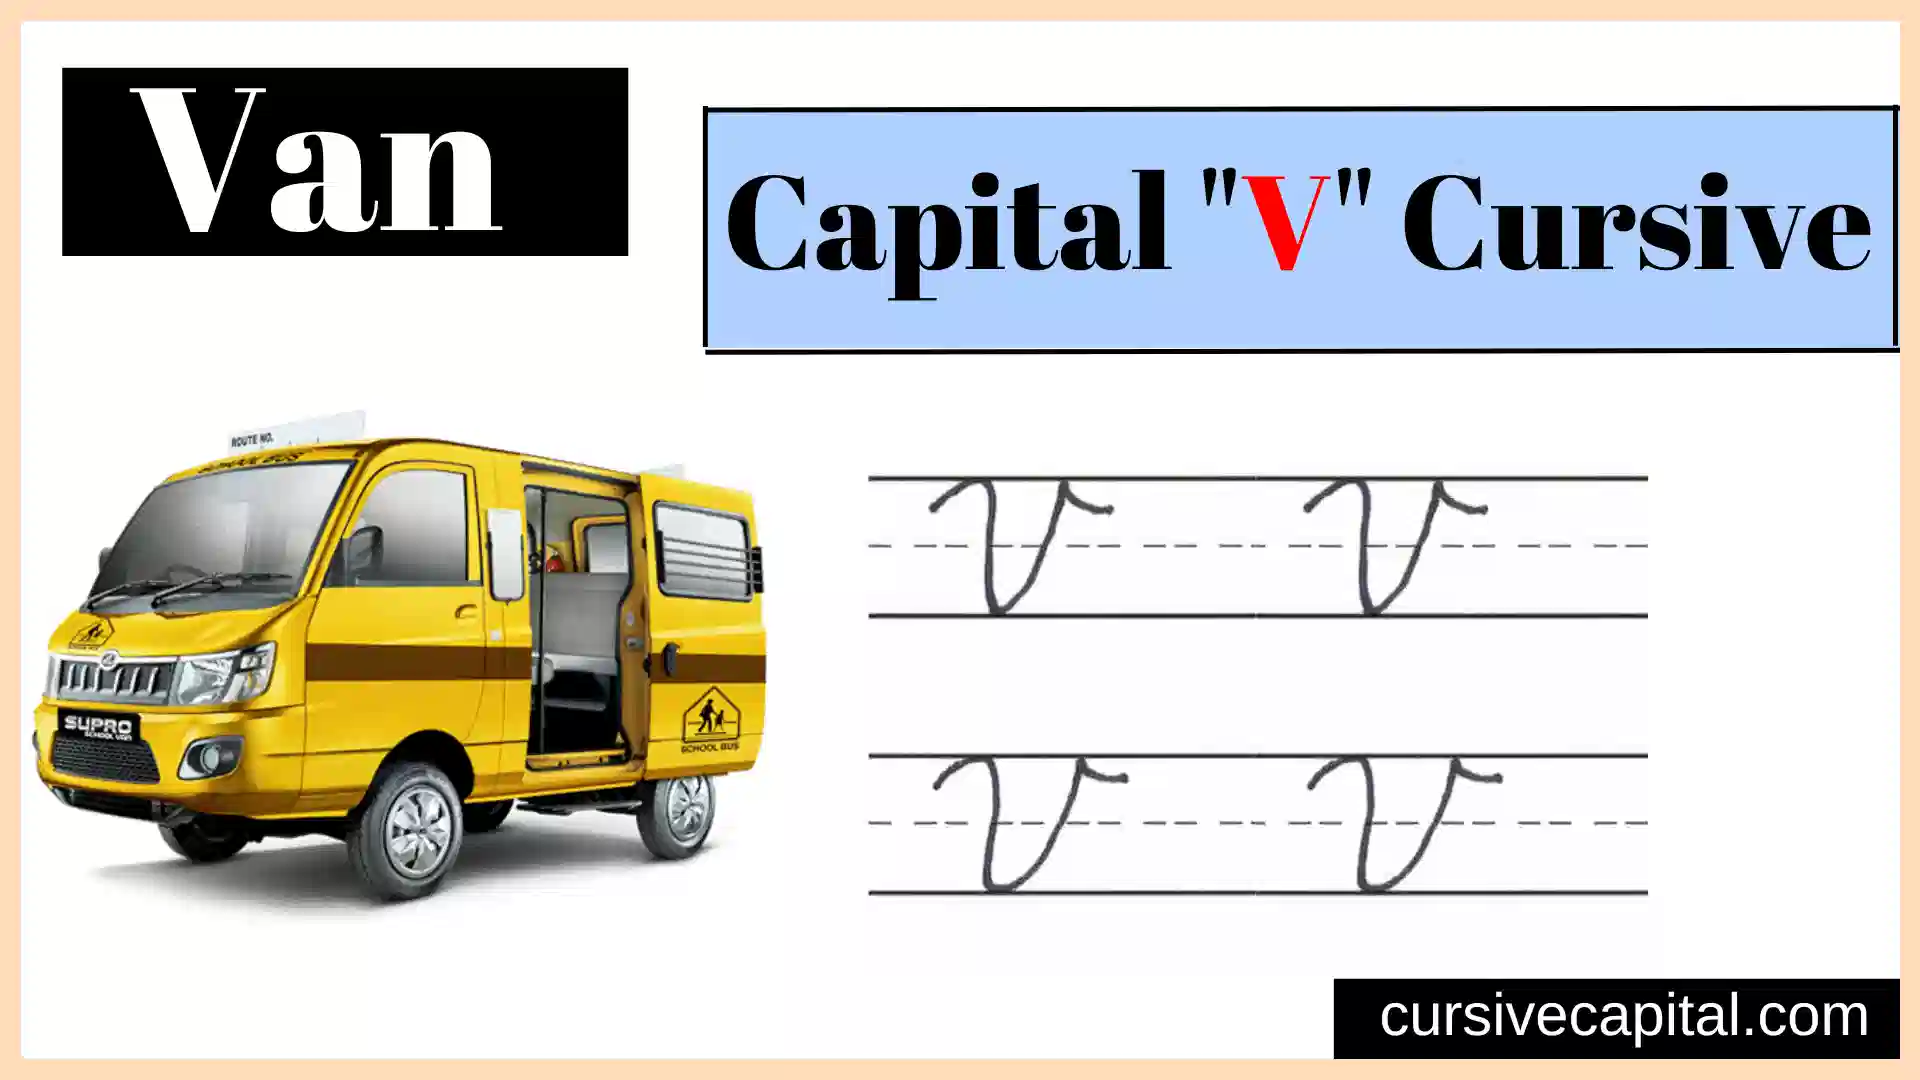 Capital V cursive